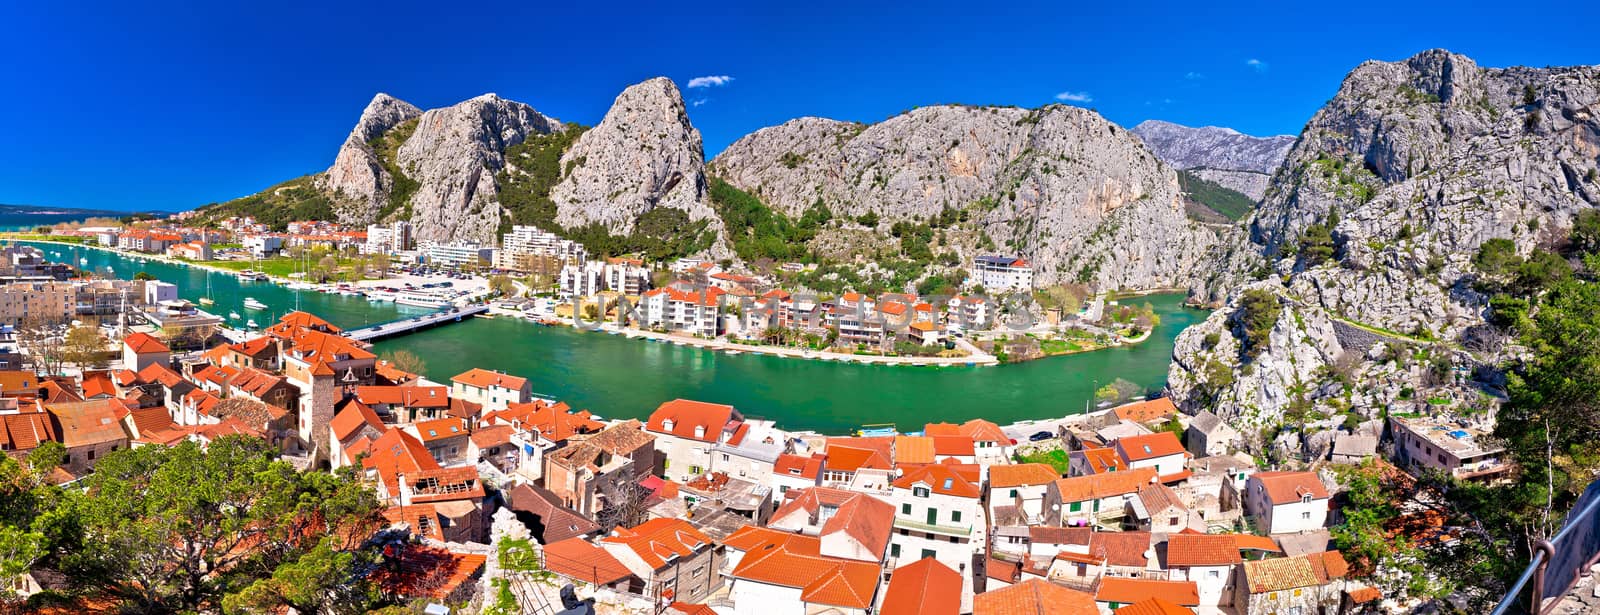 Town of Omis and Cetina river mouth panoramic view, Dalmatia region of Croatia